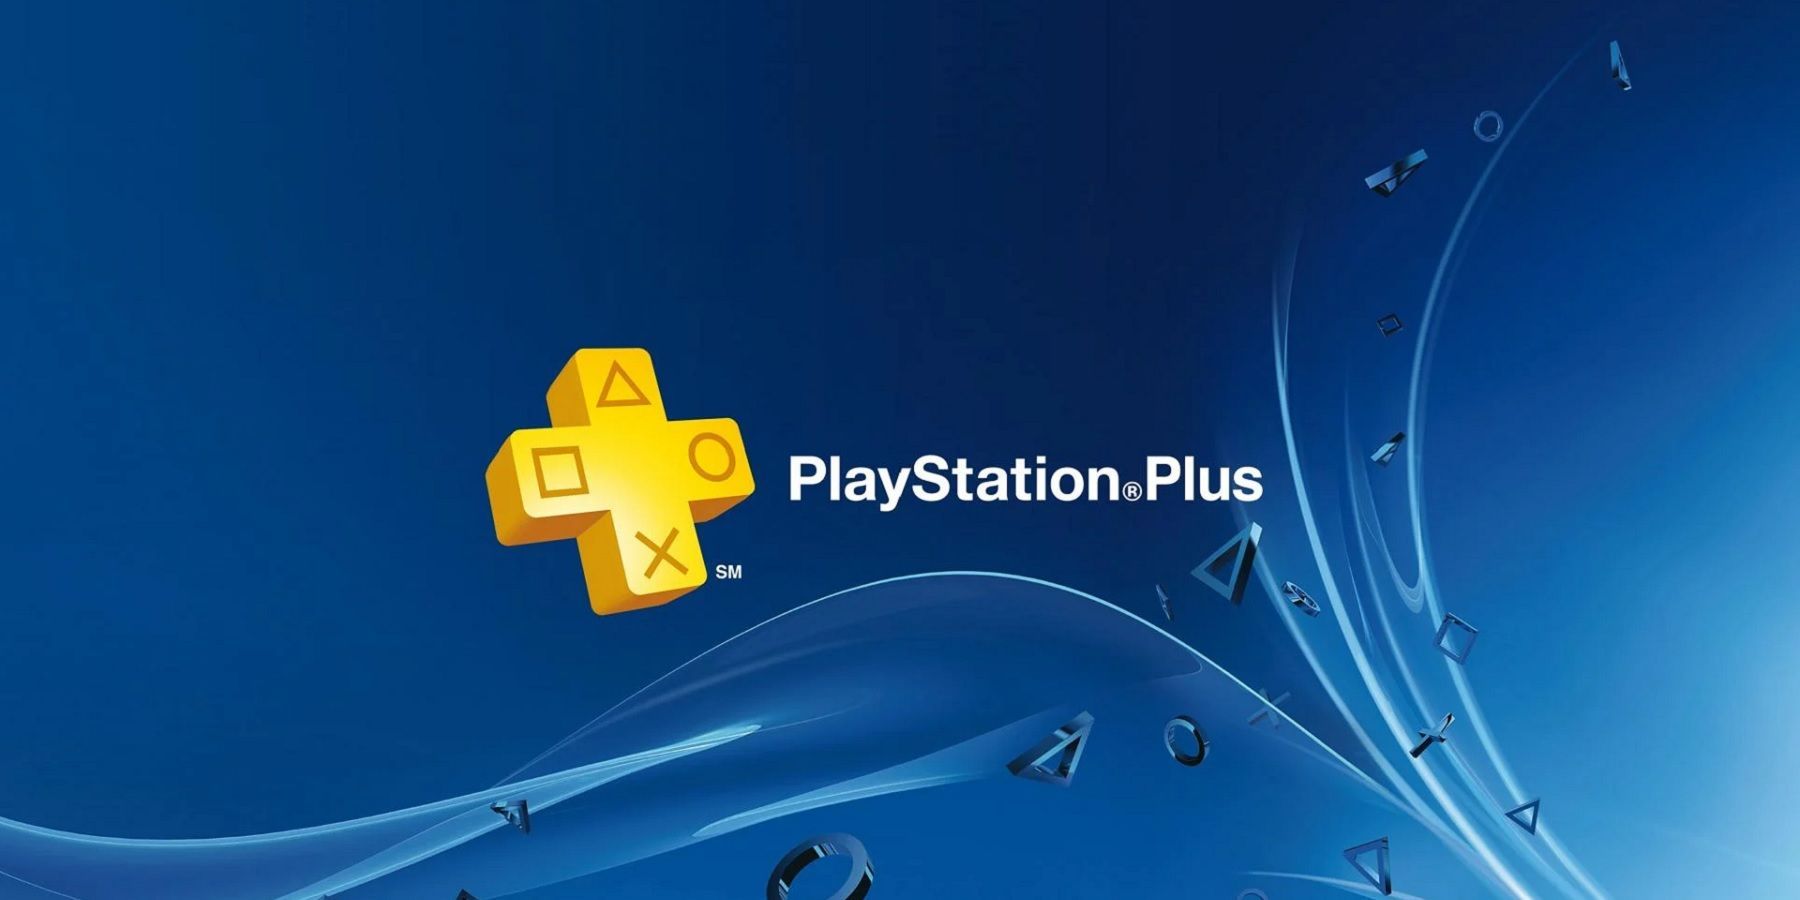 Playstation Plus classic logo screen